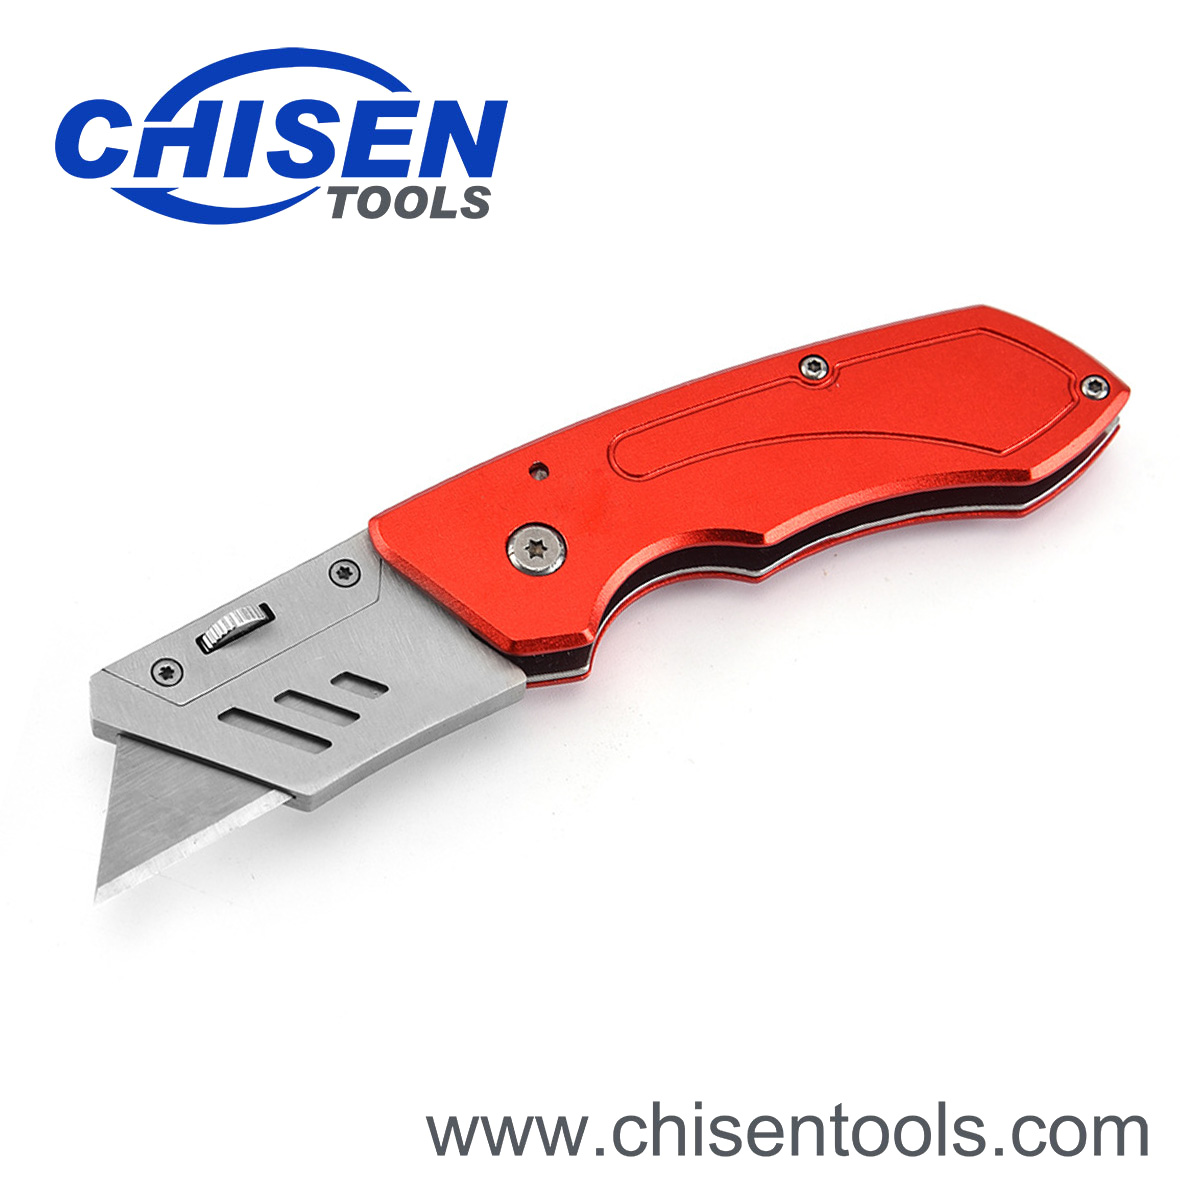 https://www.chisentools.com/folding-utility-knife/folding-utility-knife-open.jpg